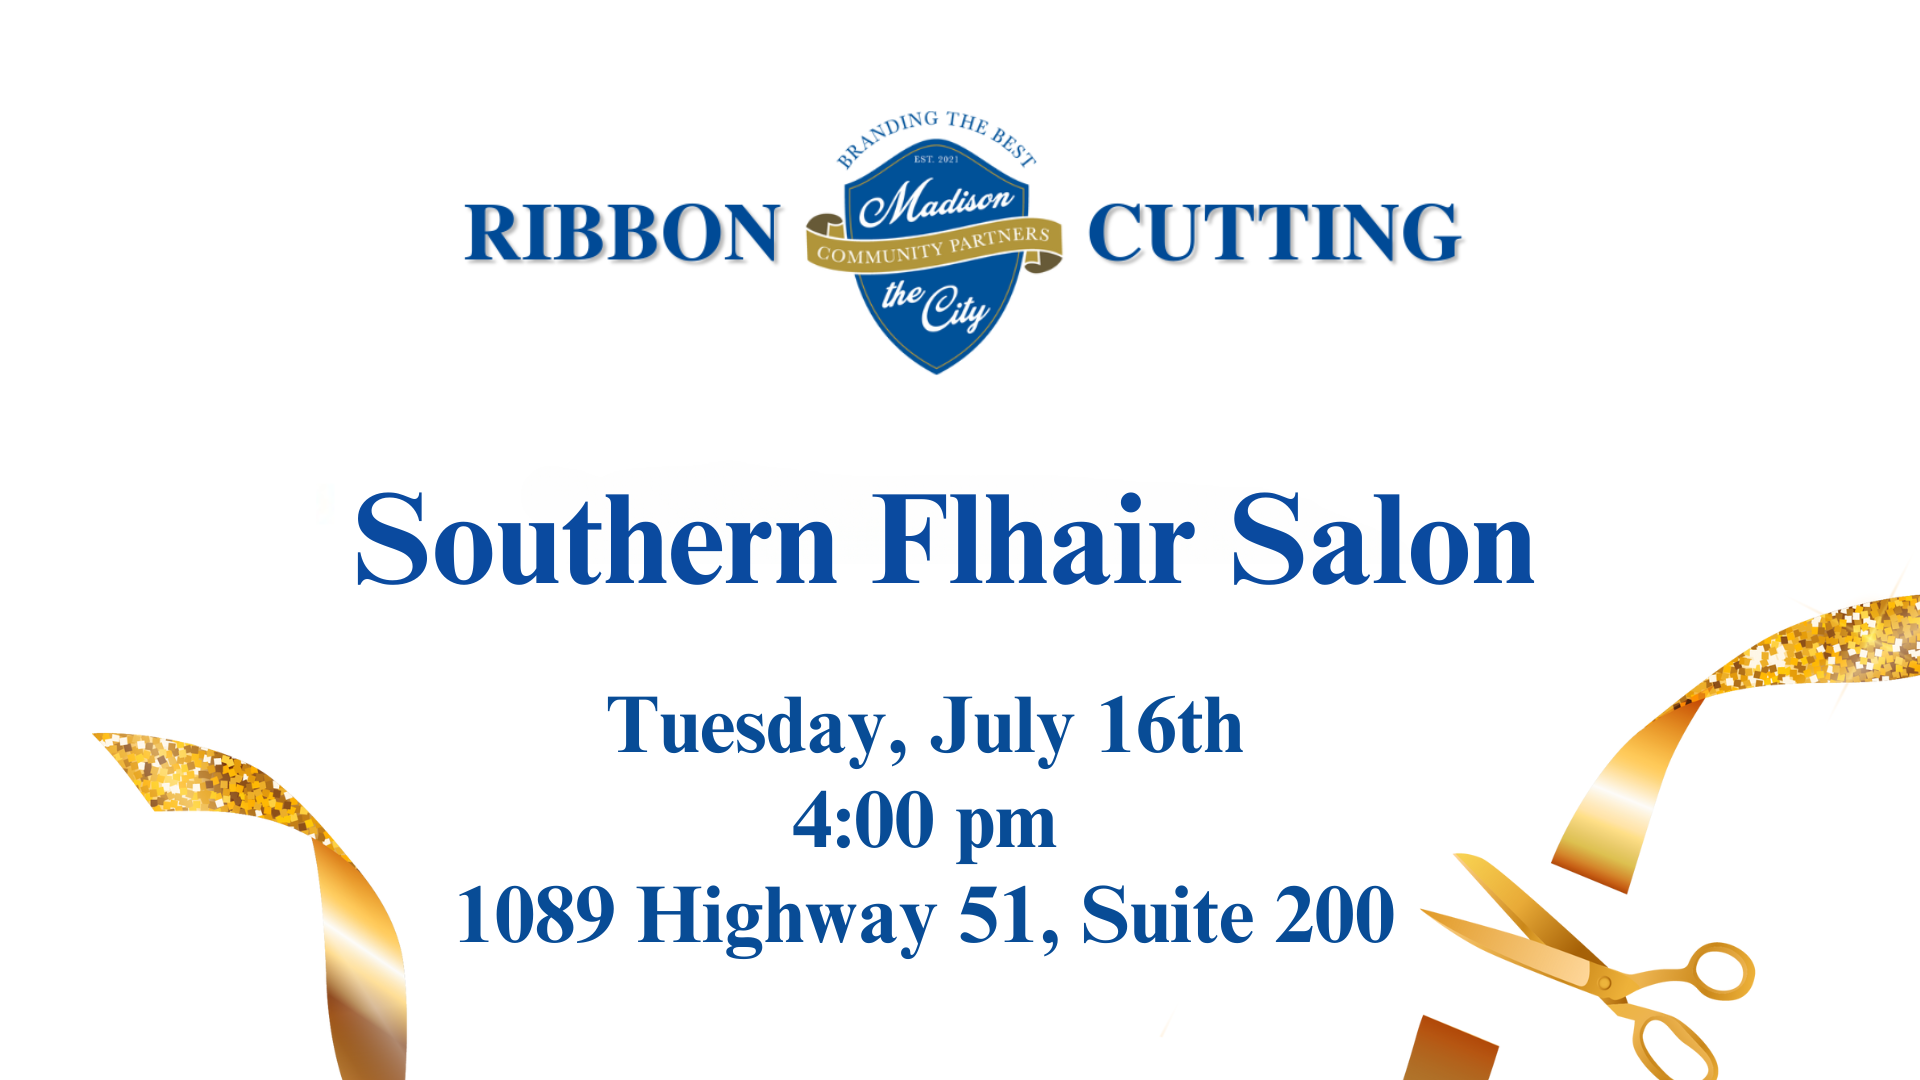 Ribbon Cutting – Southern Flhair Salon